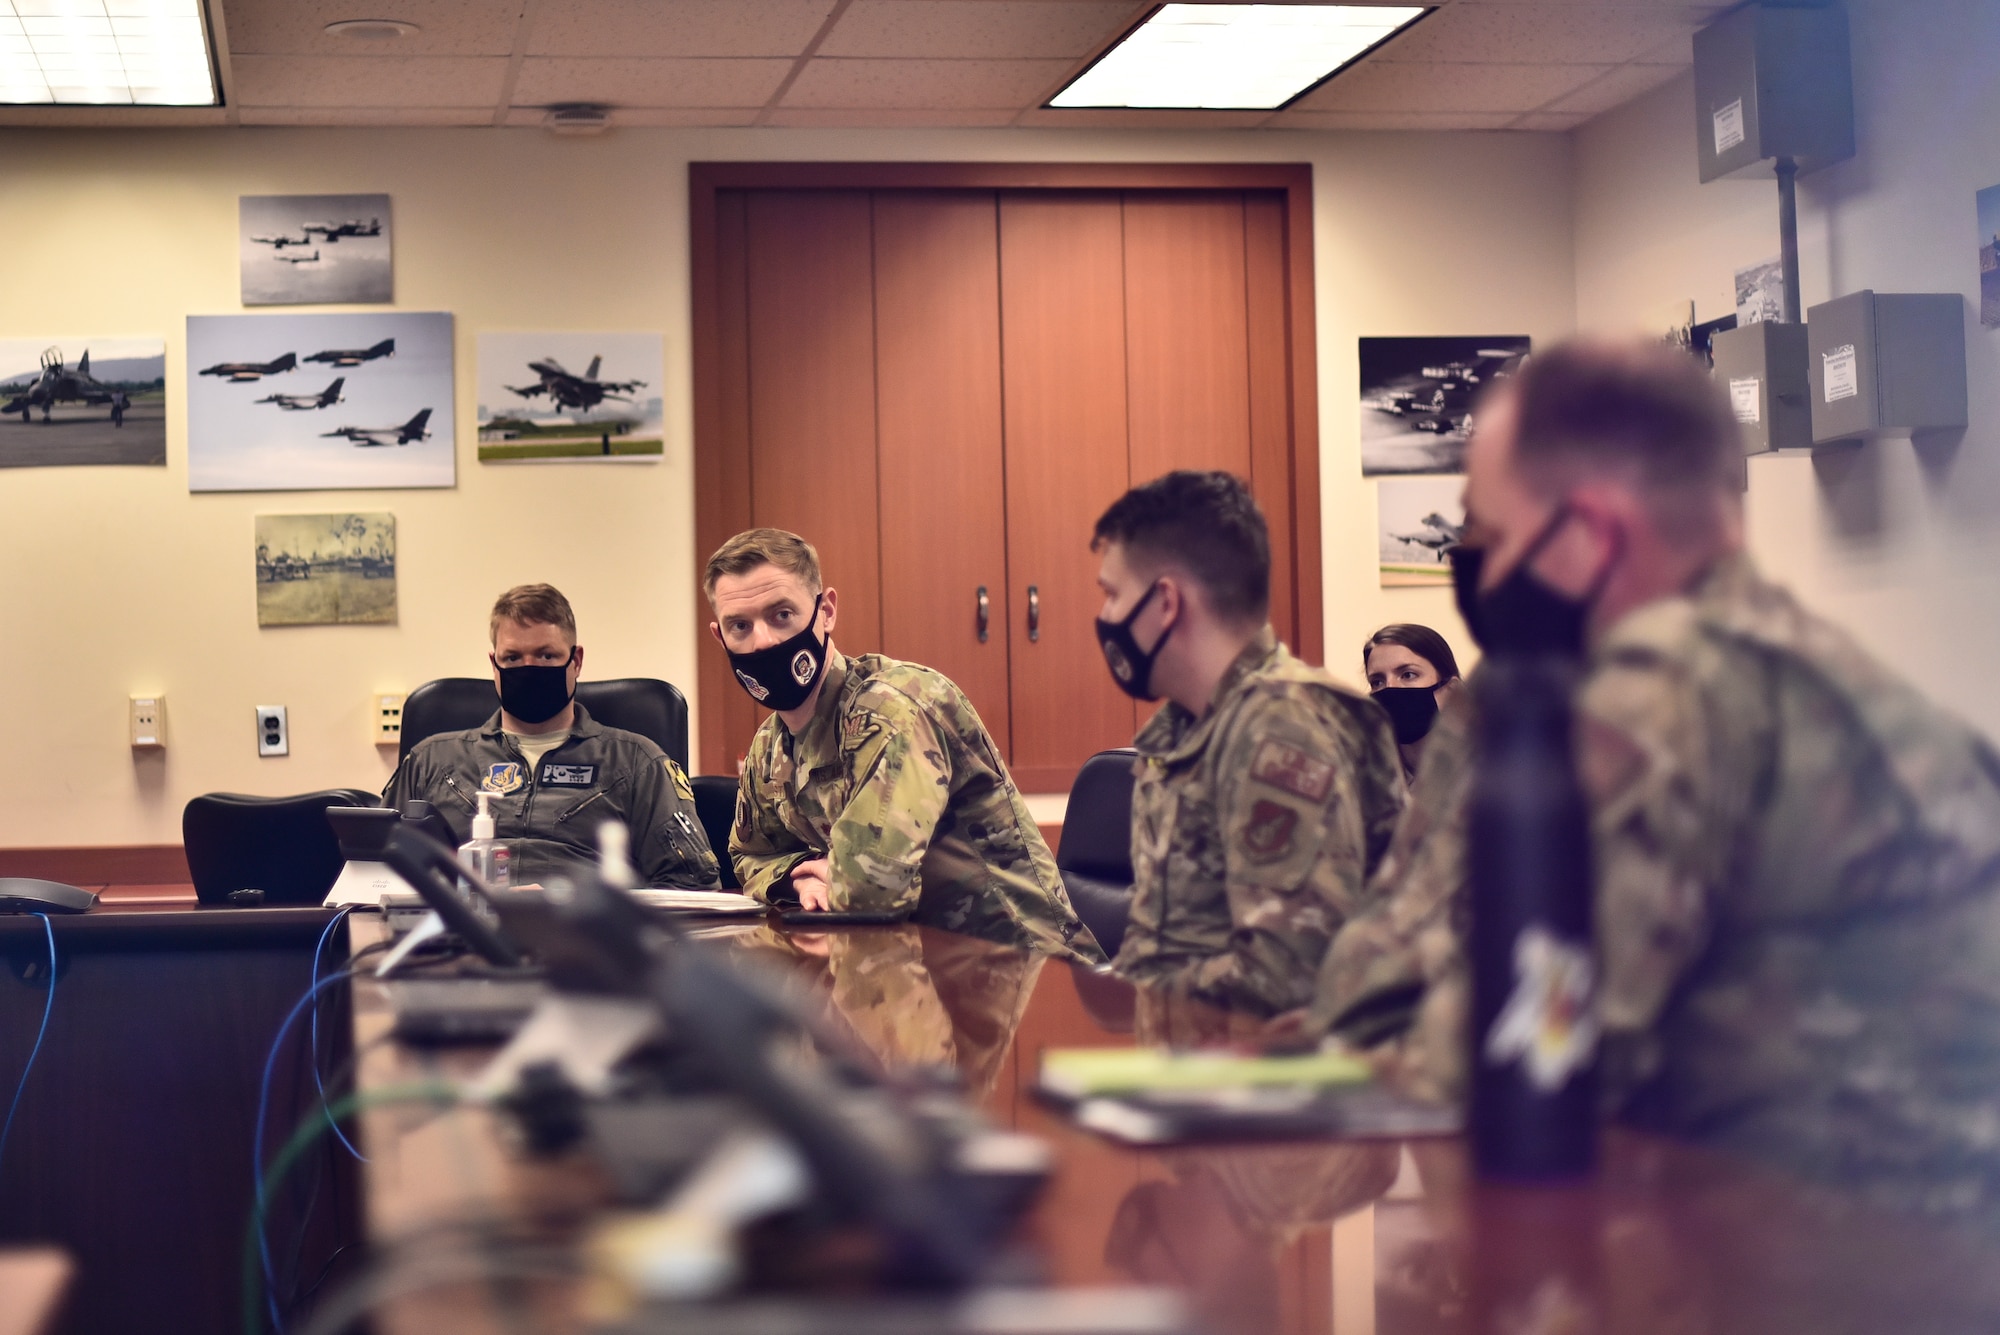 An Airman speaks during a briefing.